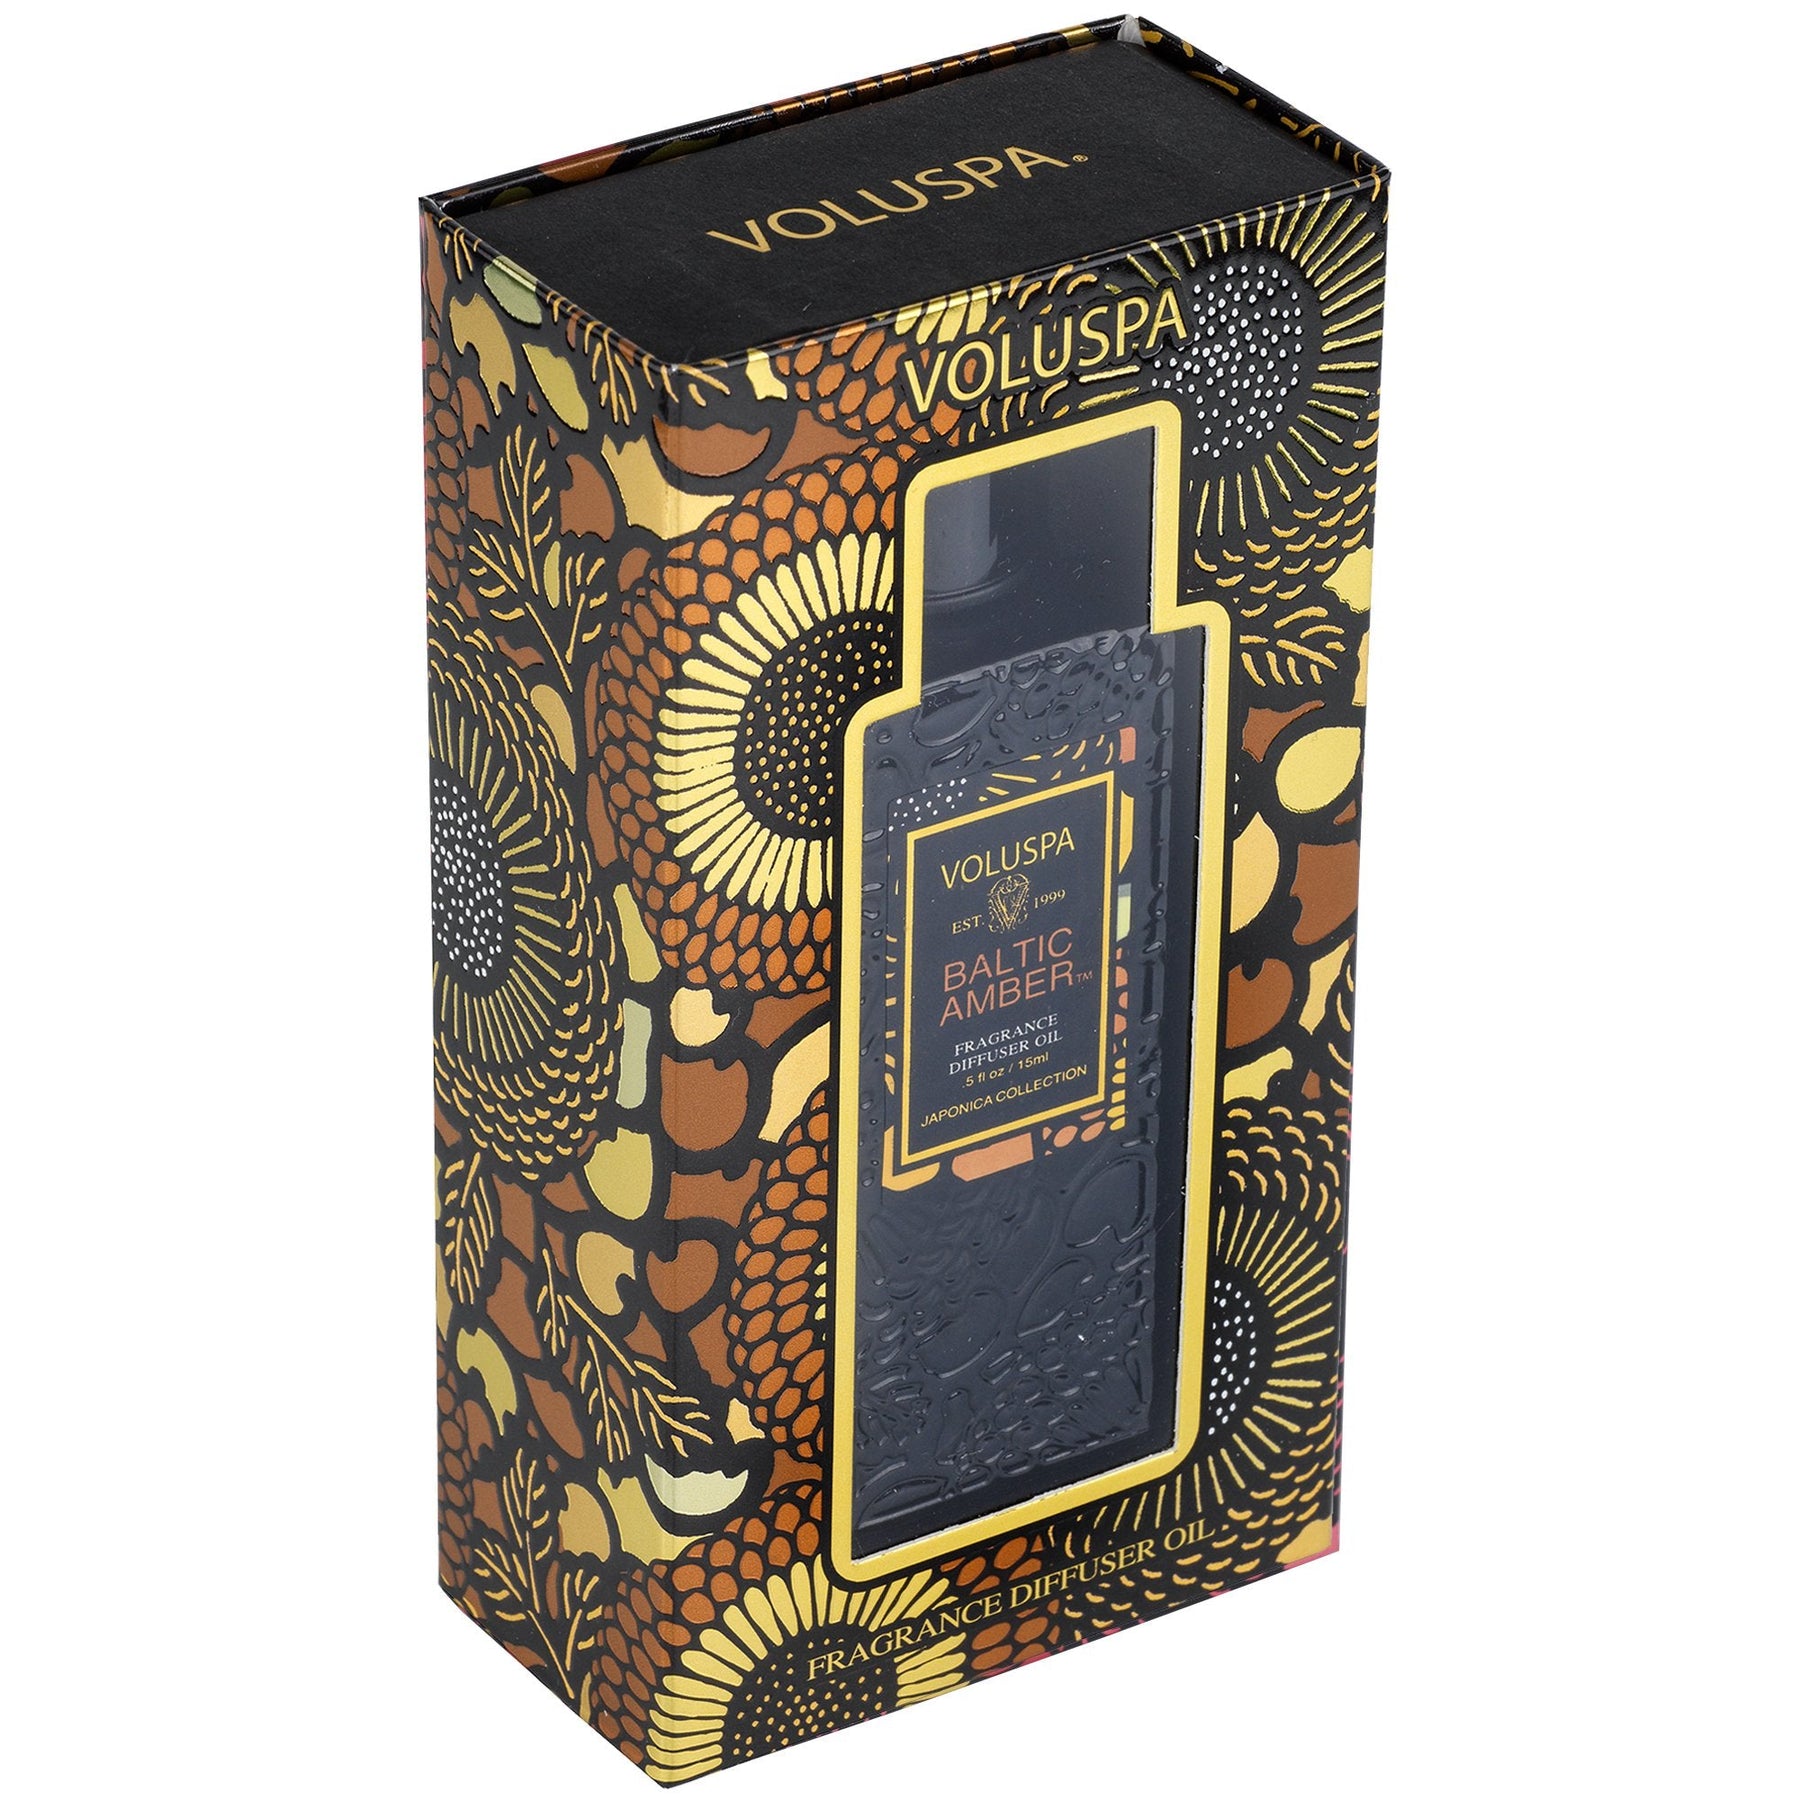 Baltic Amber - Ultrasonic Diffuser Fragrance Oil